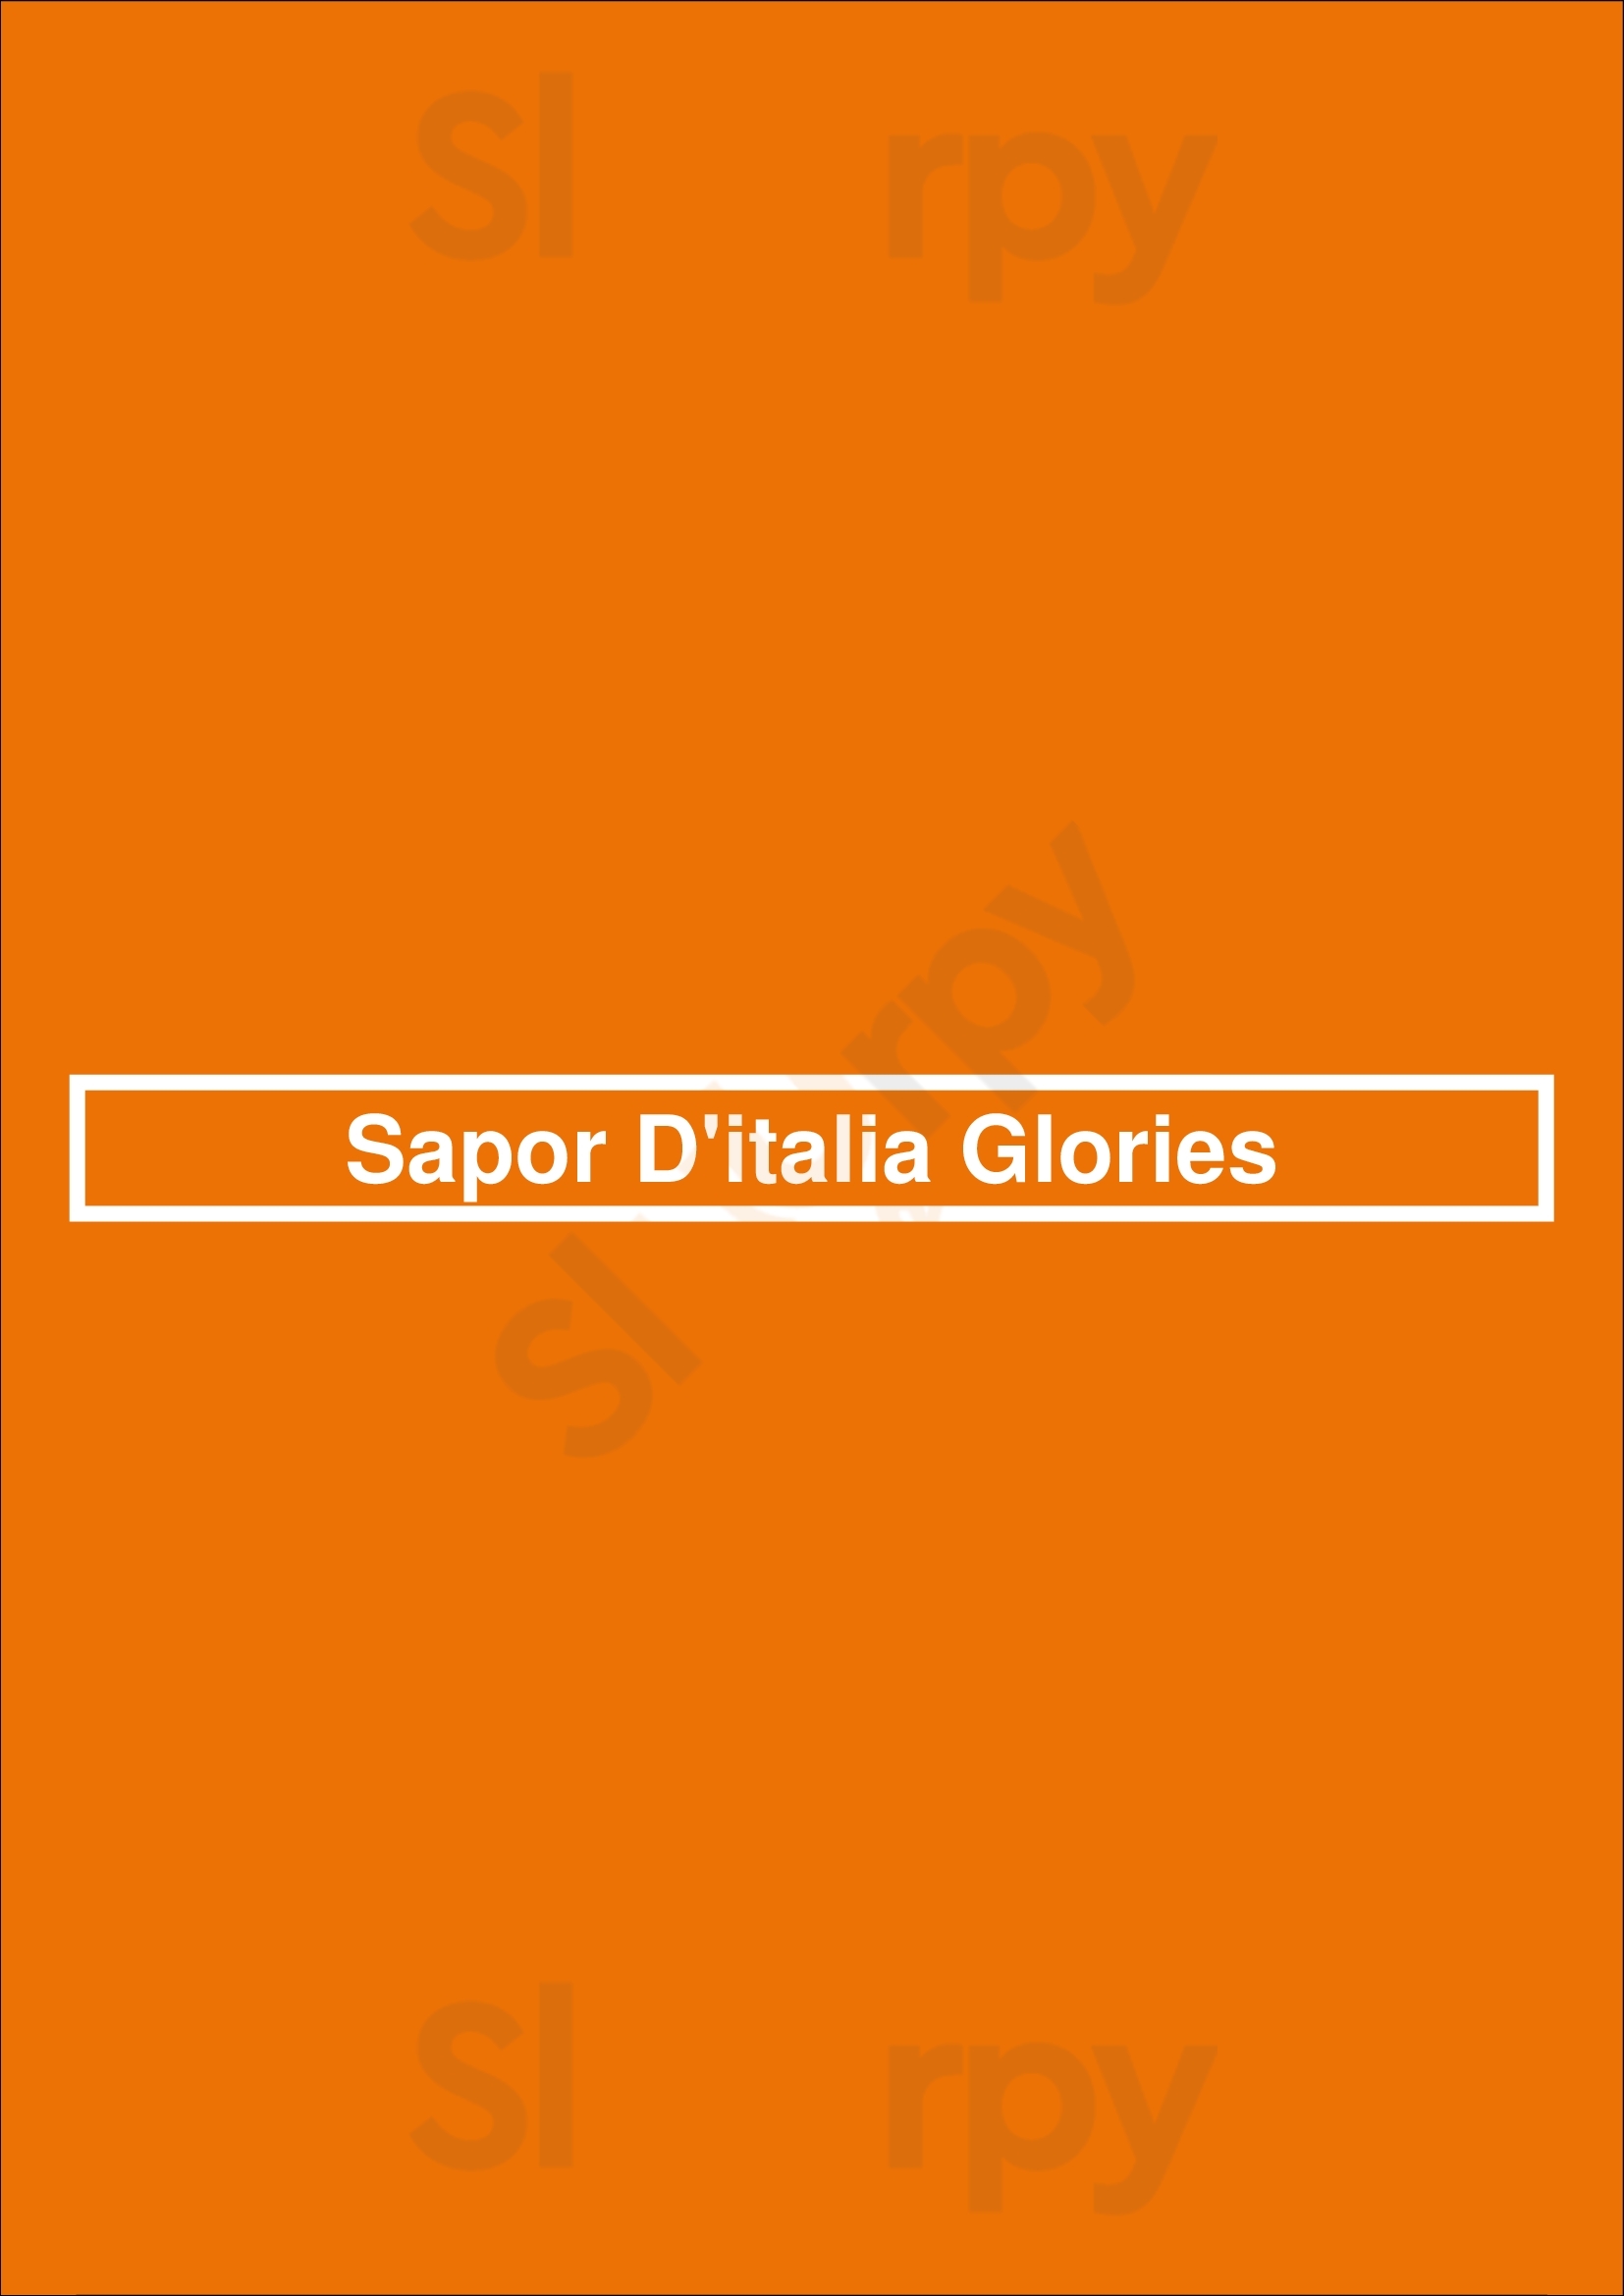 Sapor D'italia Glories Barcelona Menu - 1